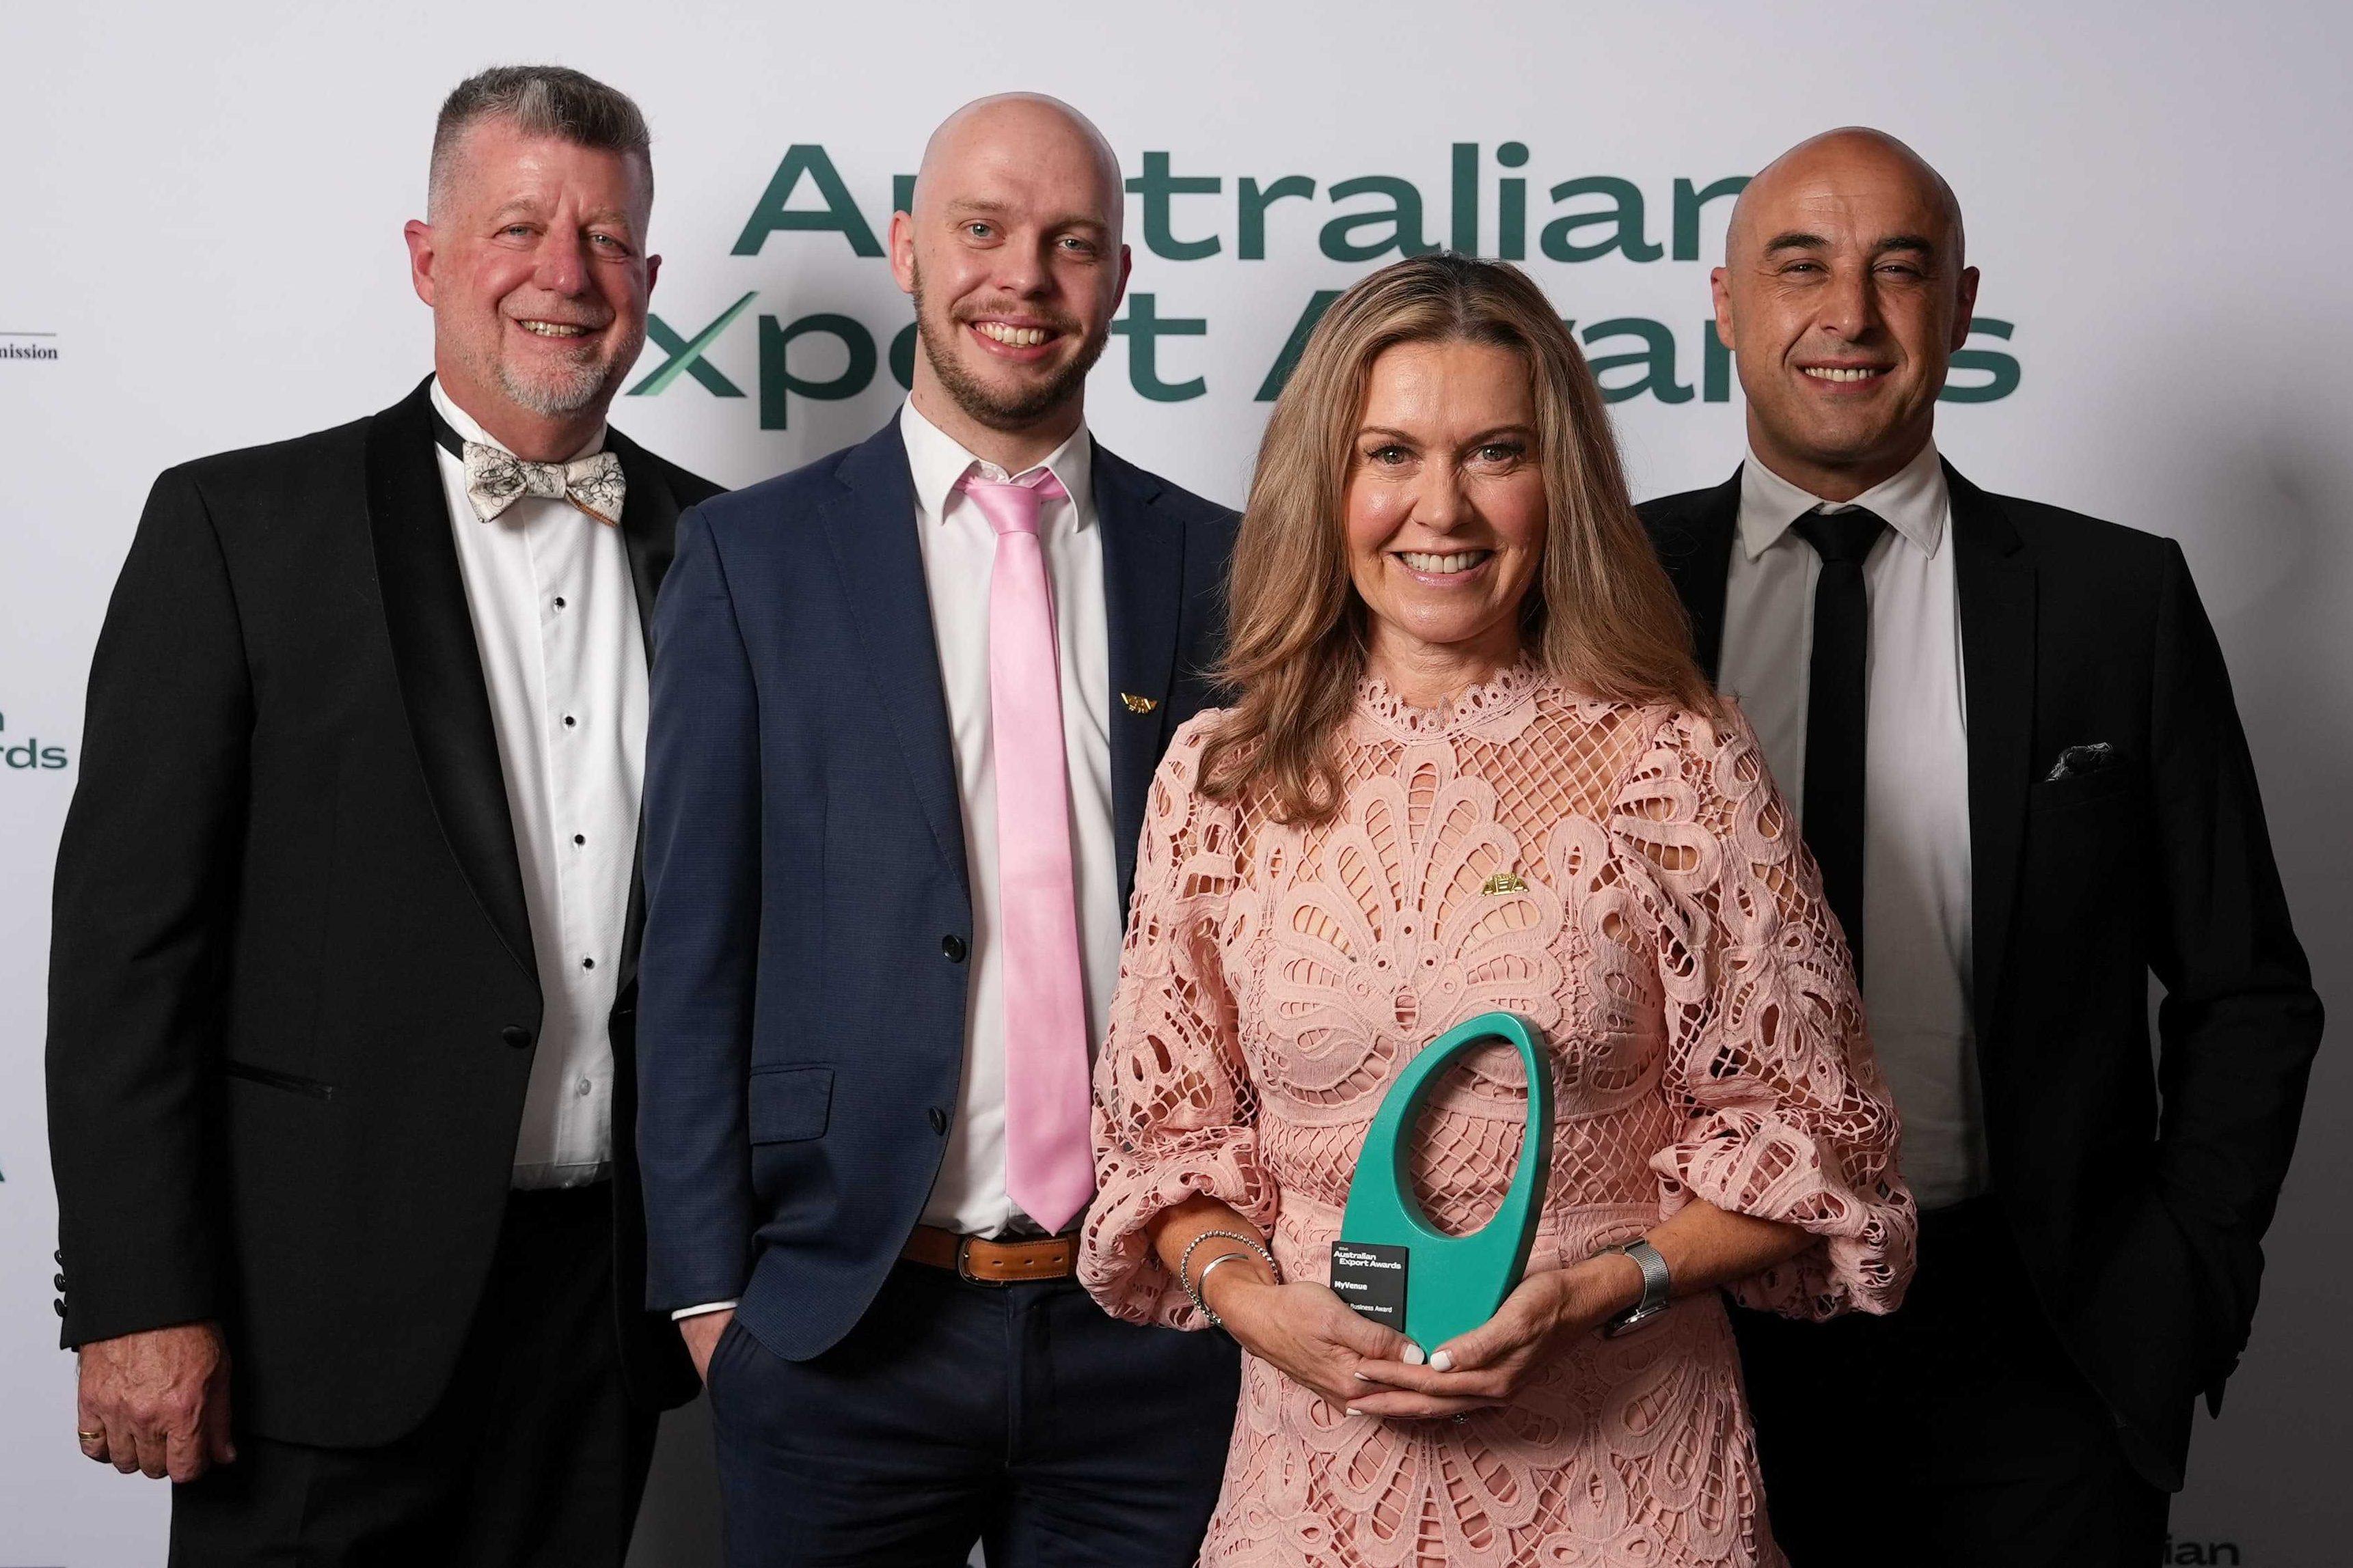 My Venue wins at the Australian Export Awards